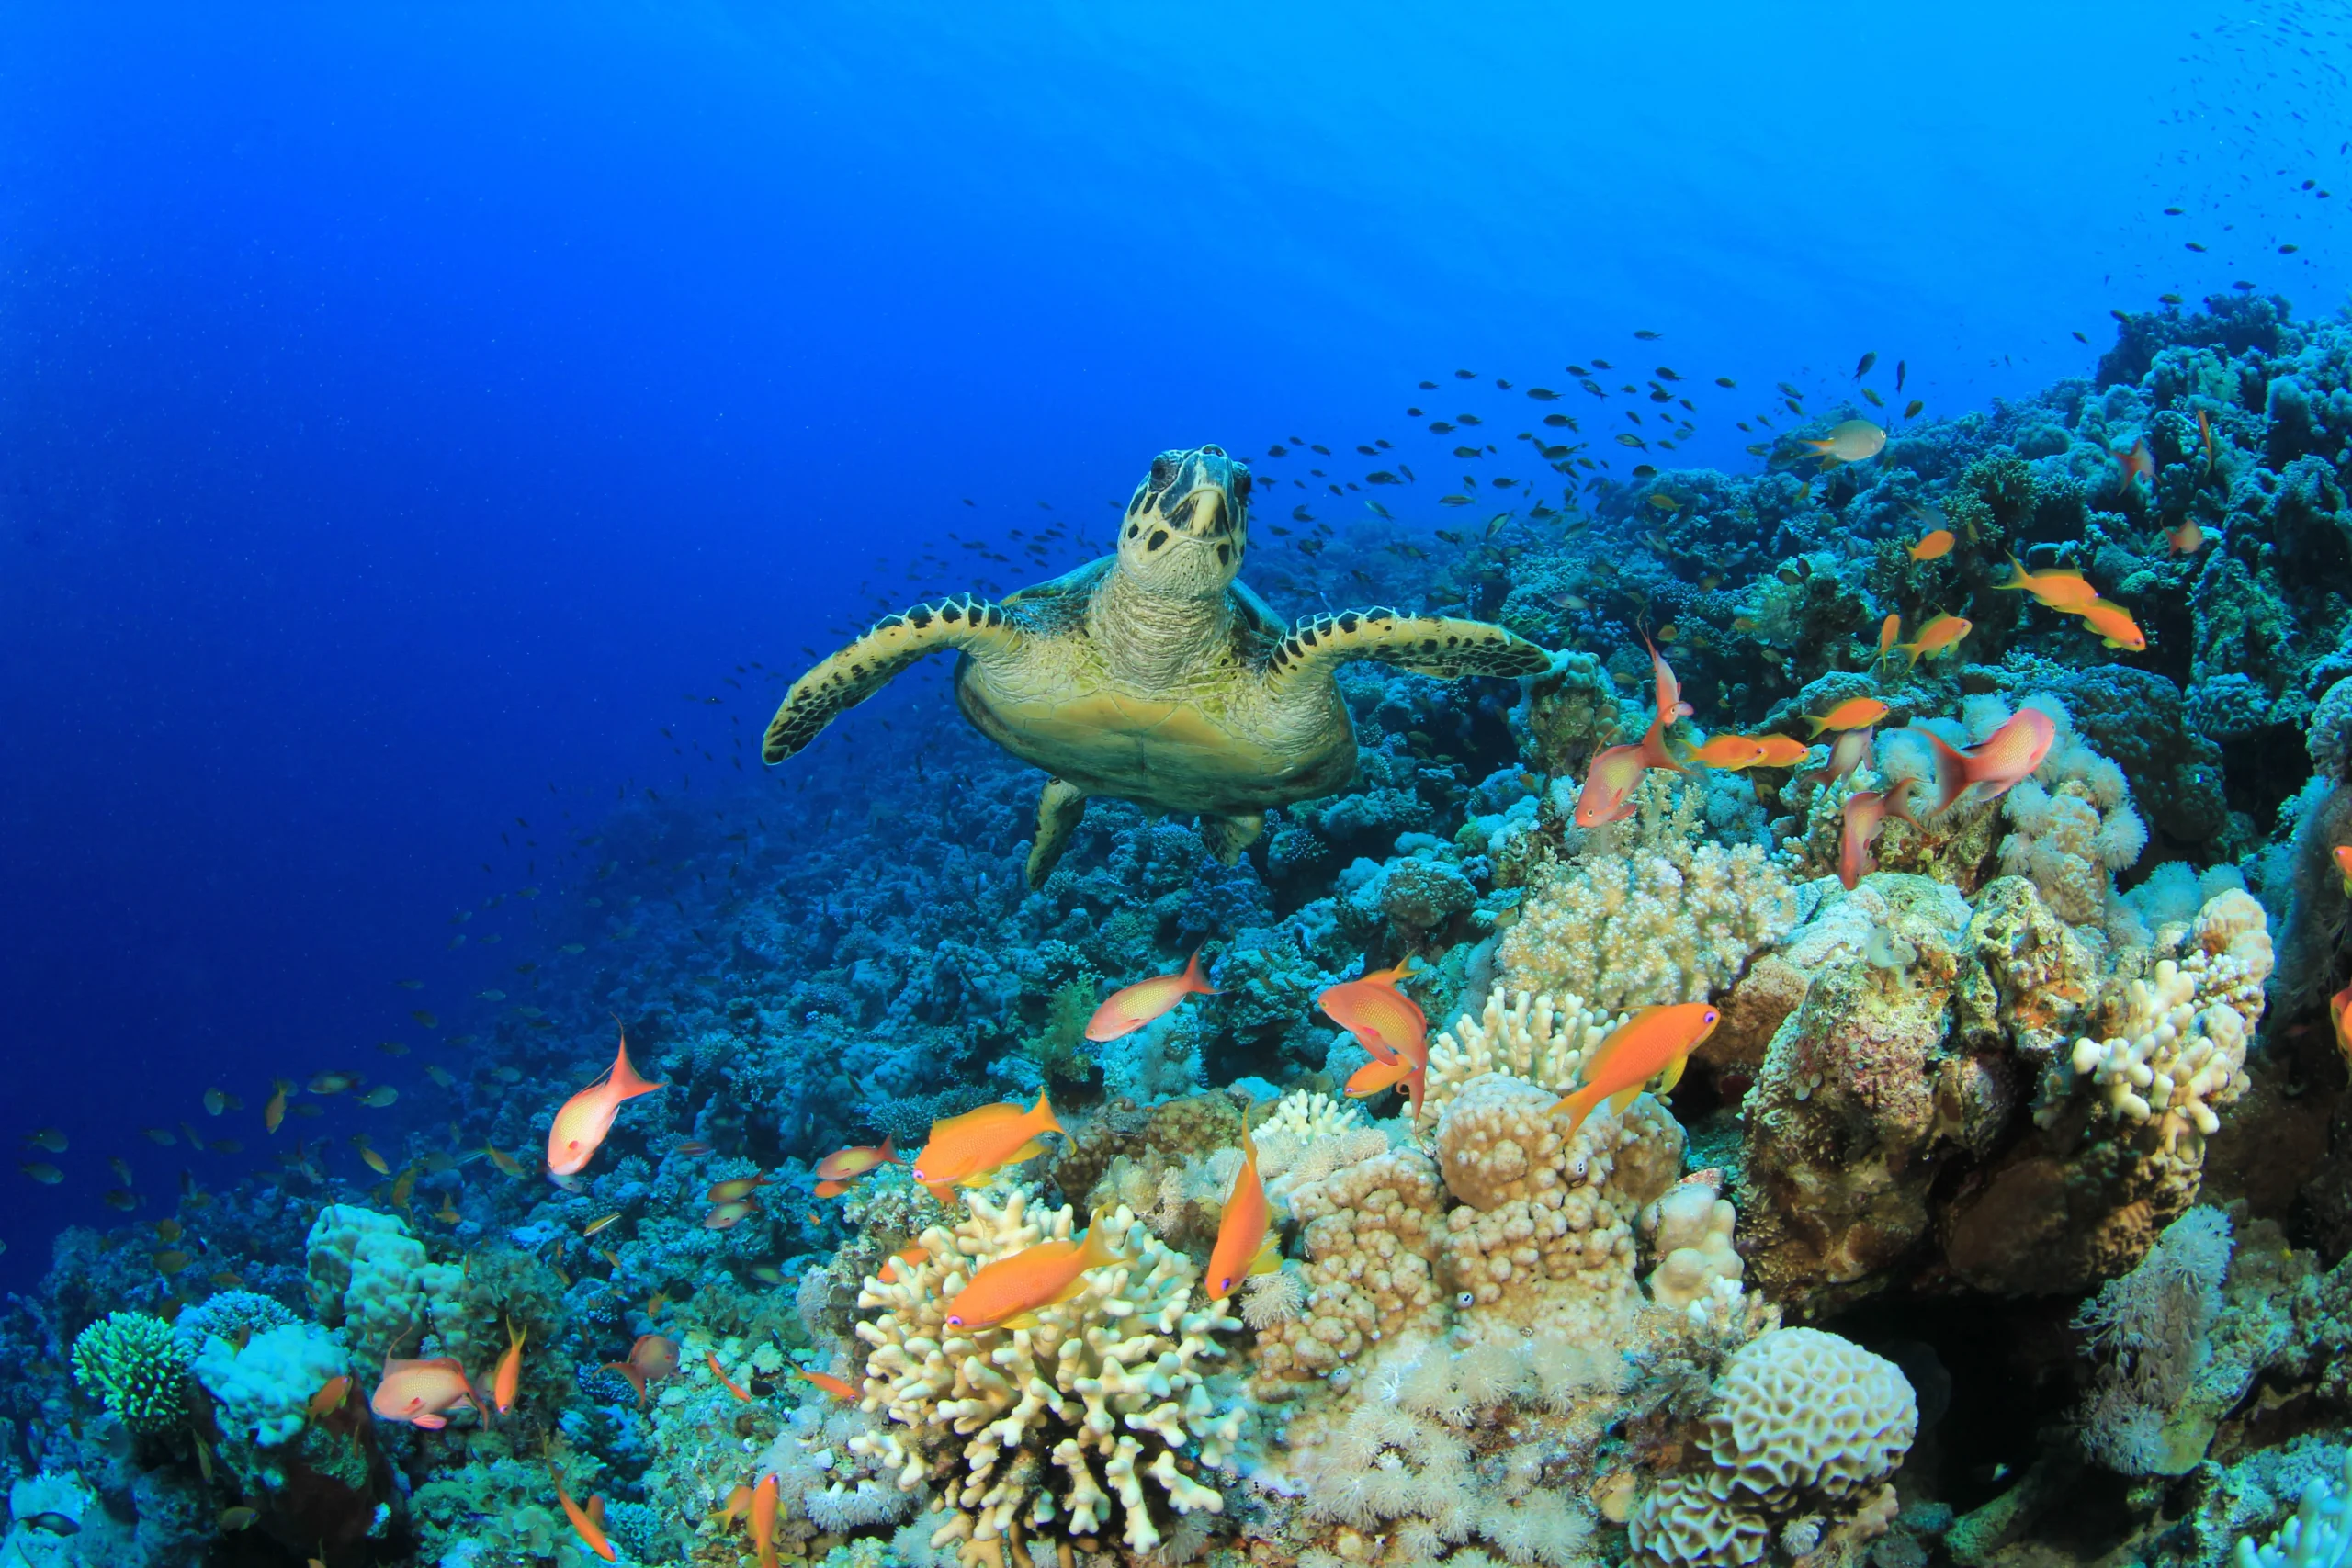 Ocean conservation